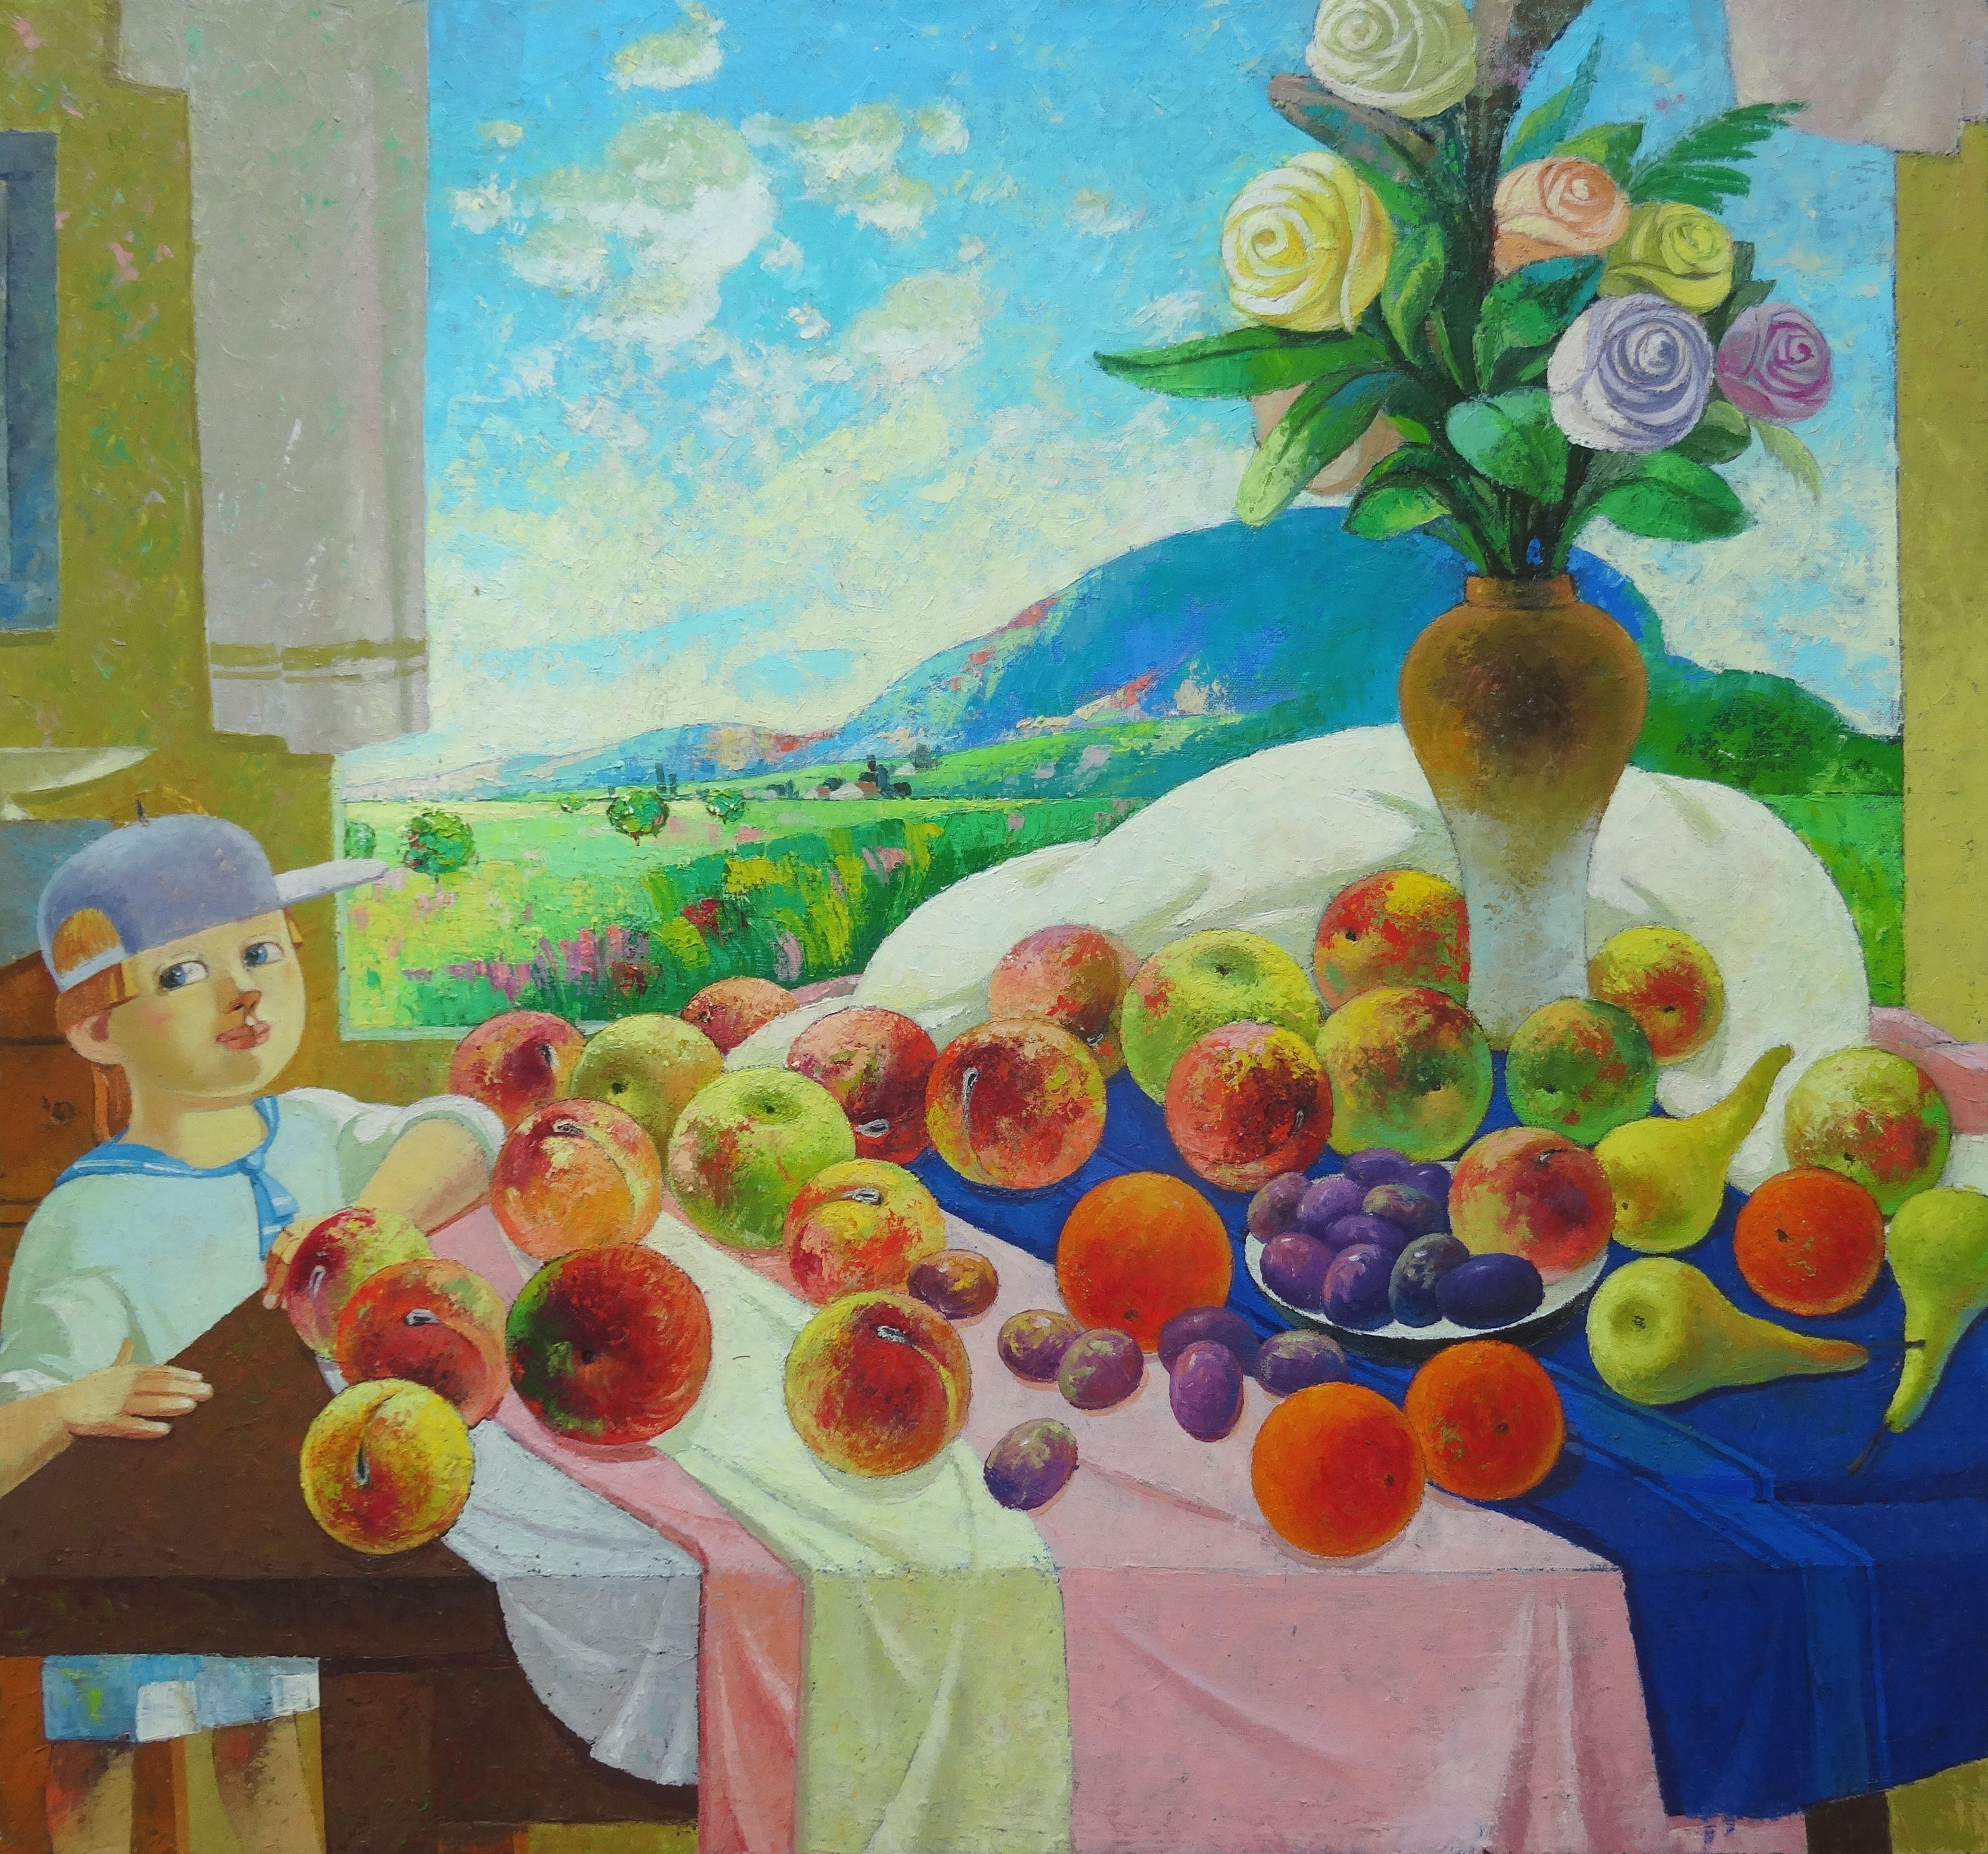 Nugzar Kakhiani (Kahiani) Figurative Painting - Bright Still Life with fruits and vase. 2020. Oil on canvas, 70x75cm